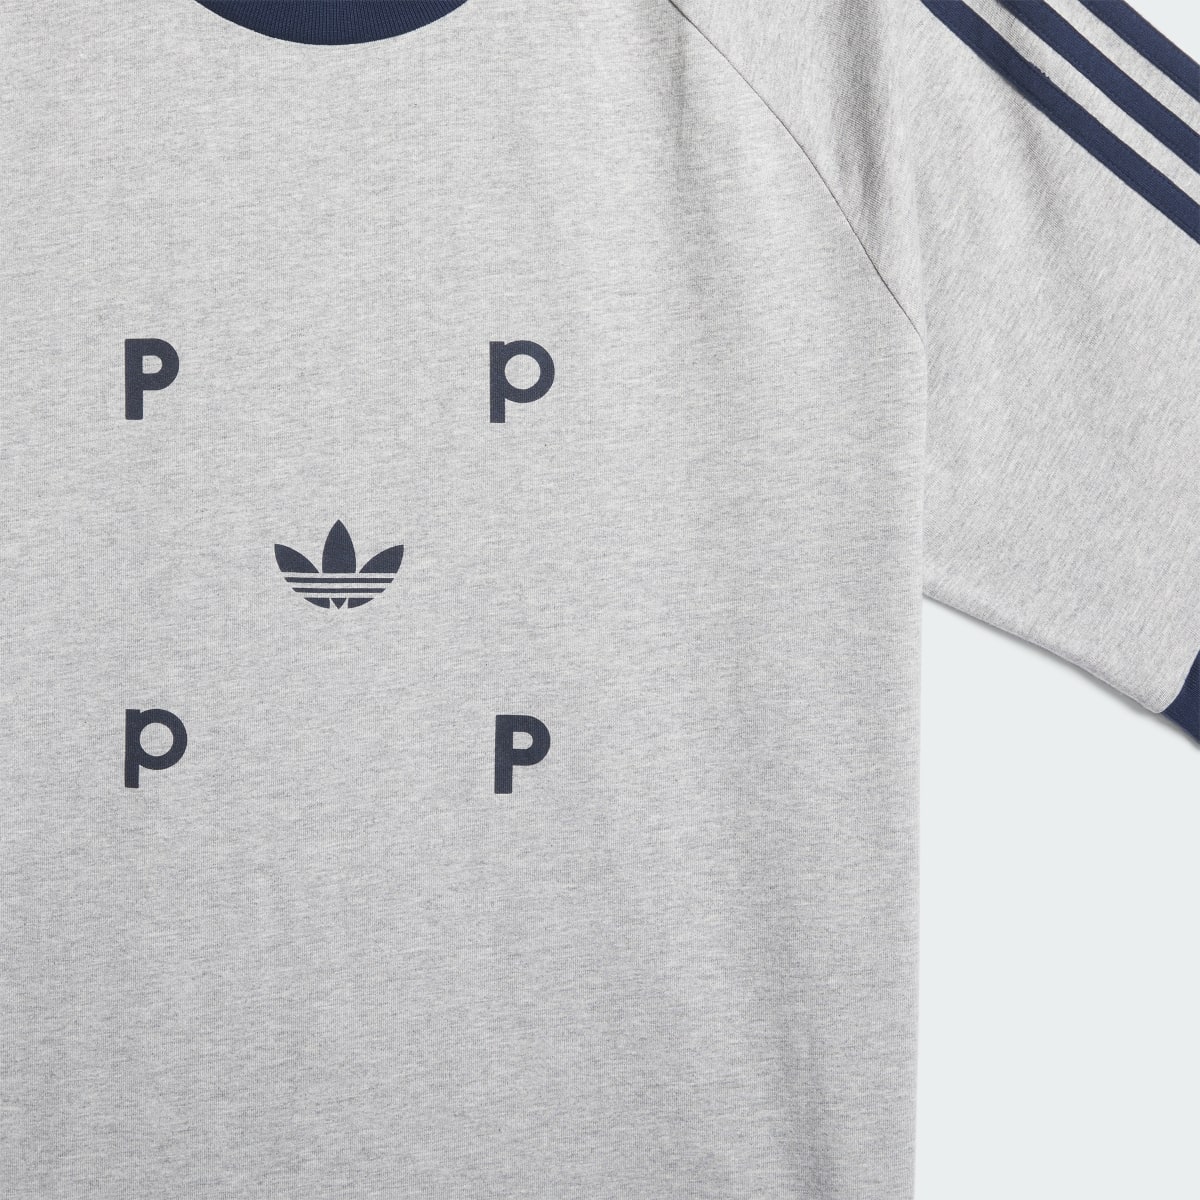 Adidas T-shirt Clássica Pop. 4